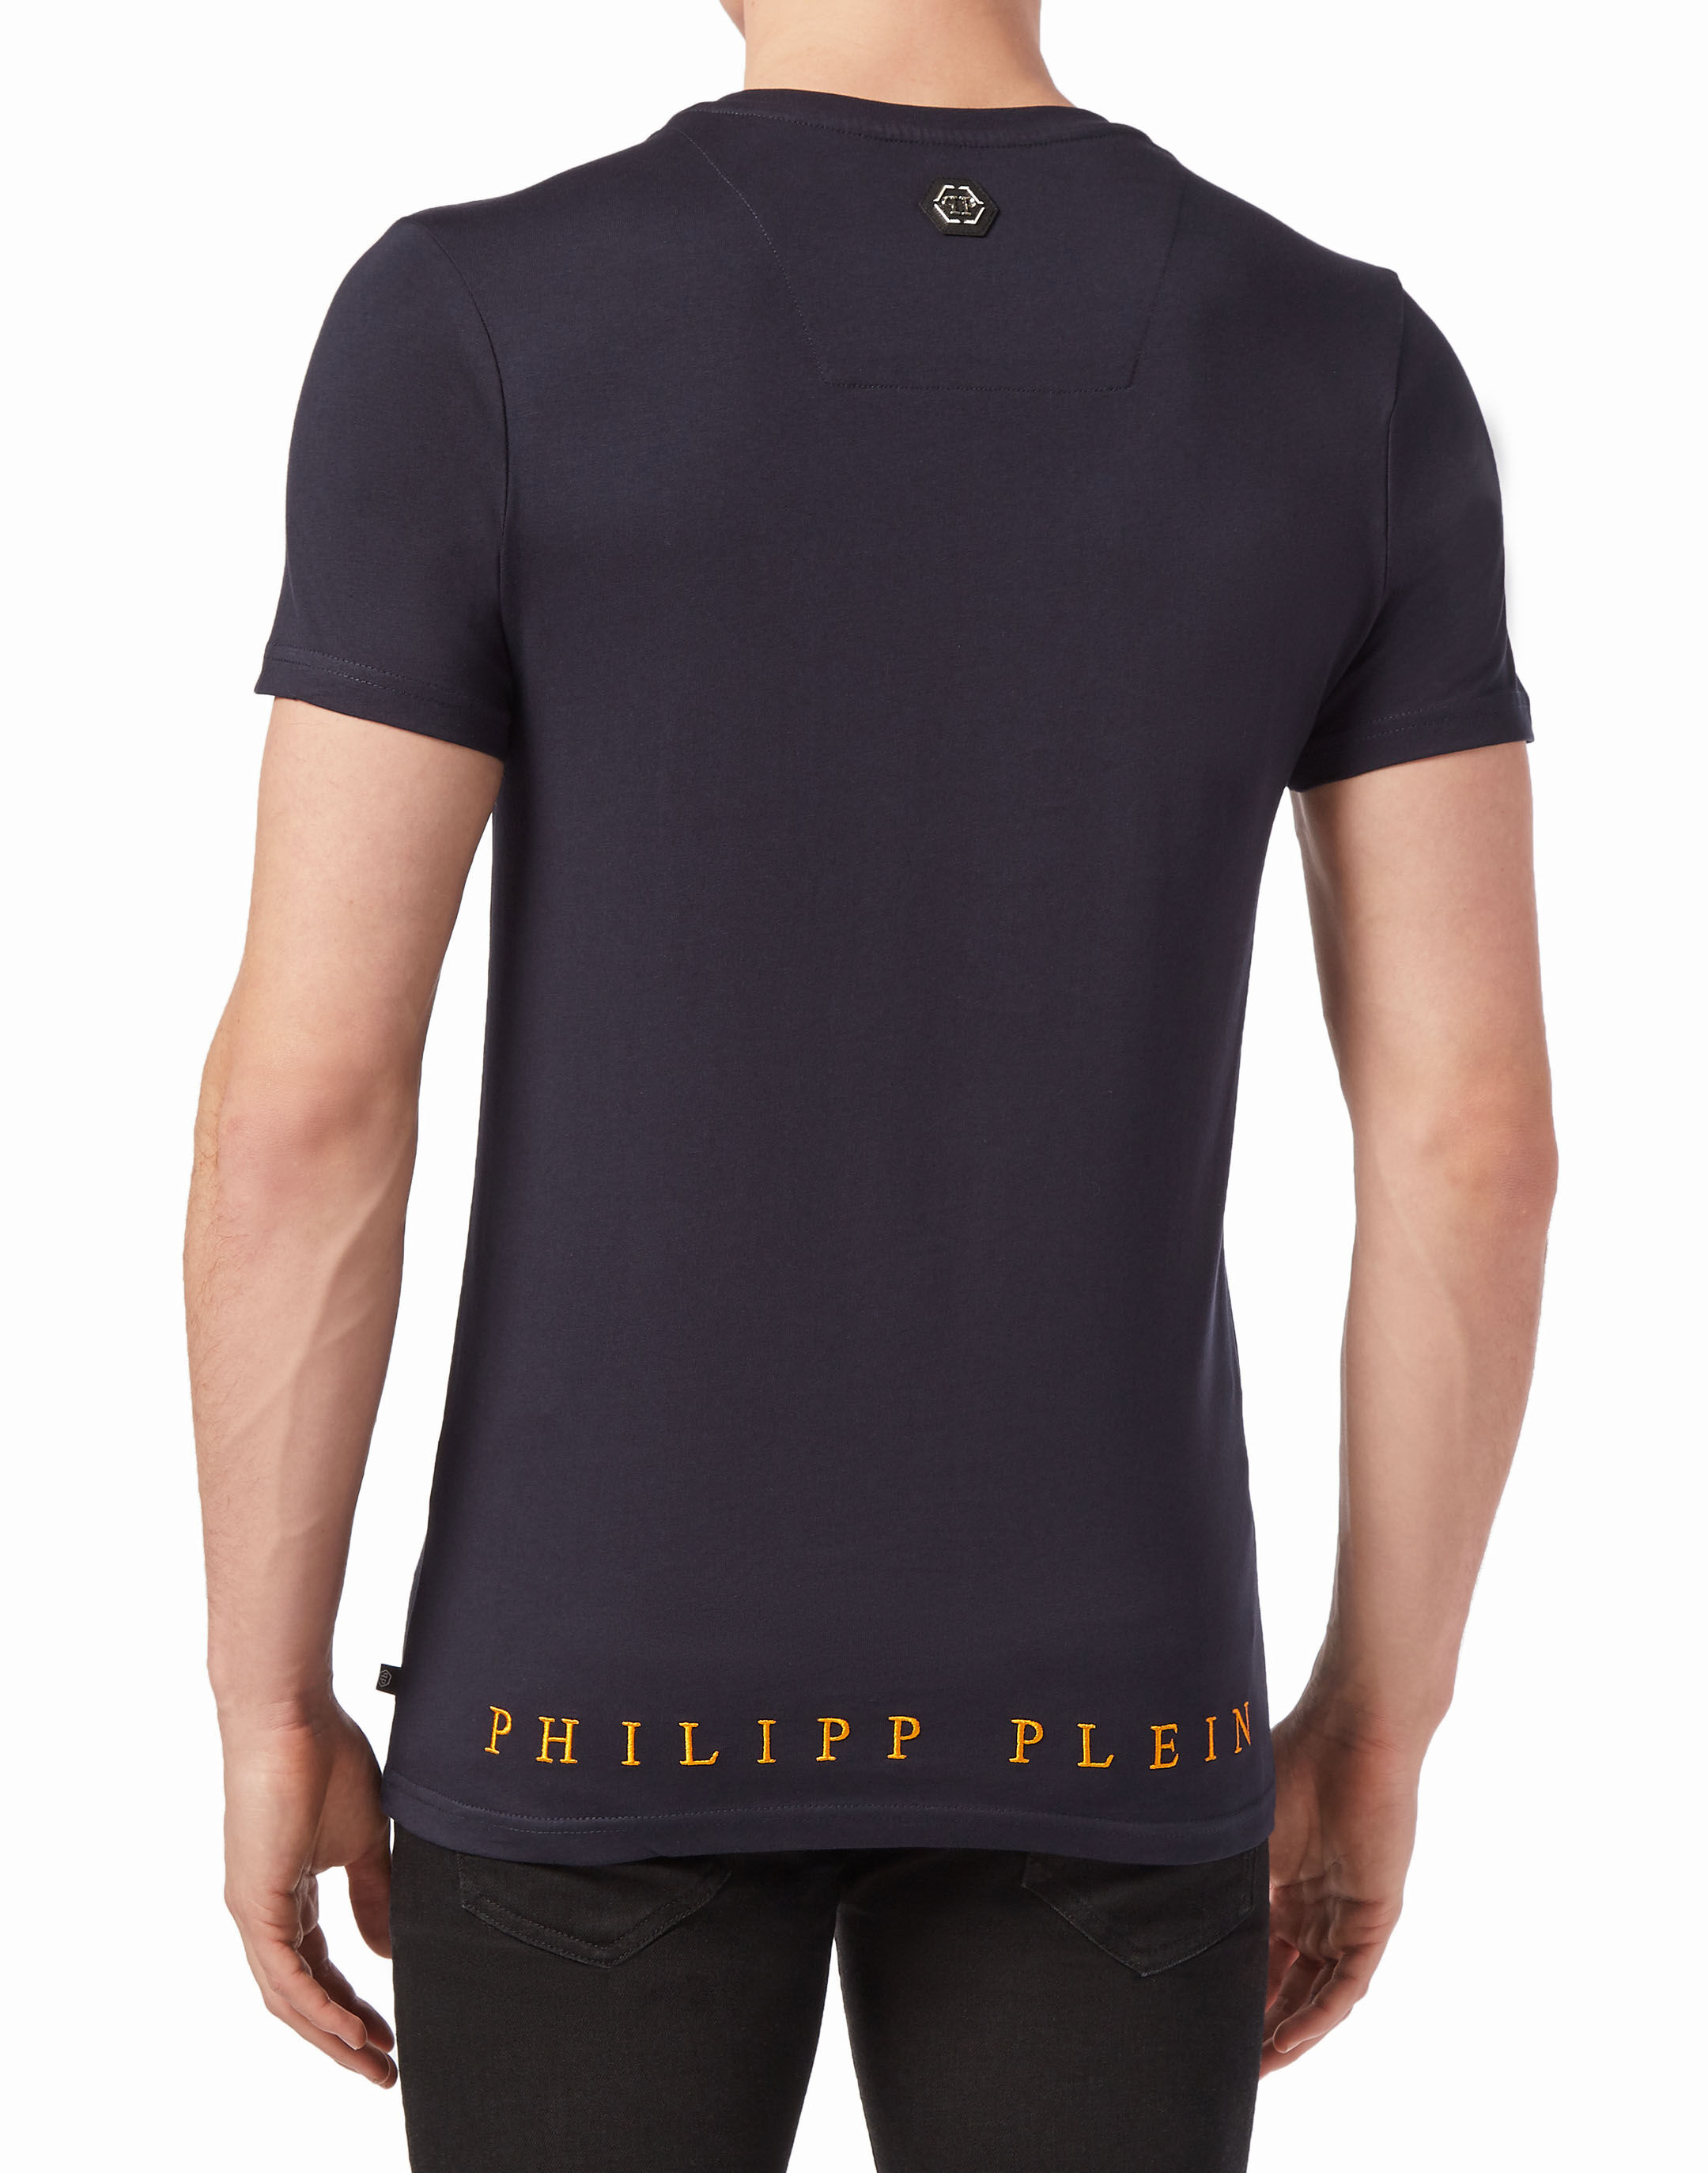 philipp plein t shirt original